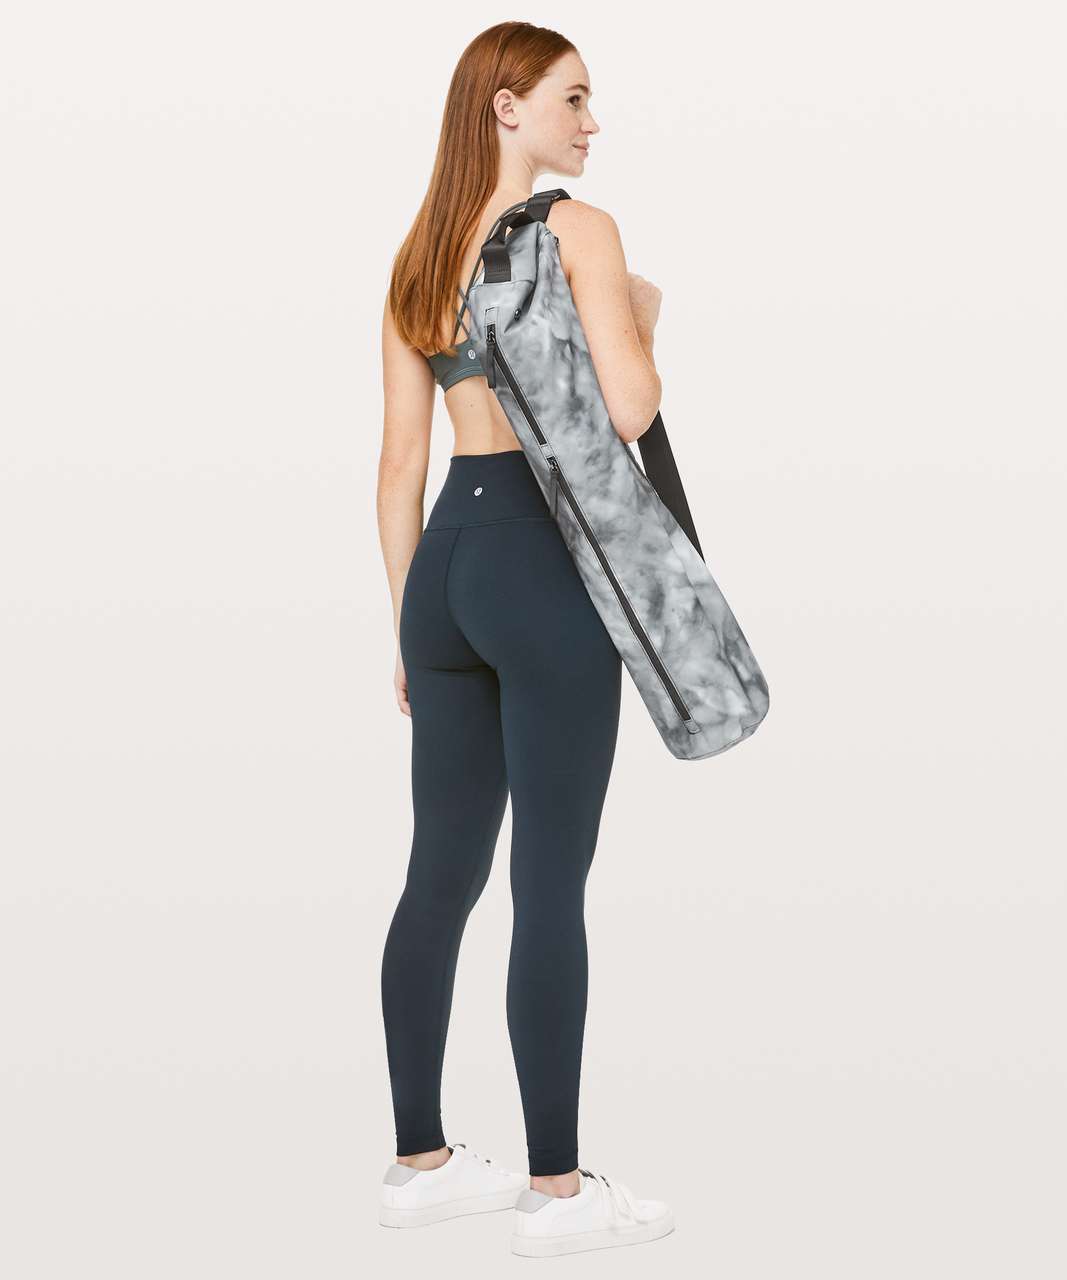 Lululemon Adjustable Yoga Mat Bag - tan